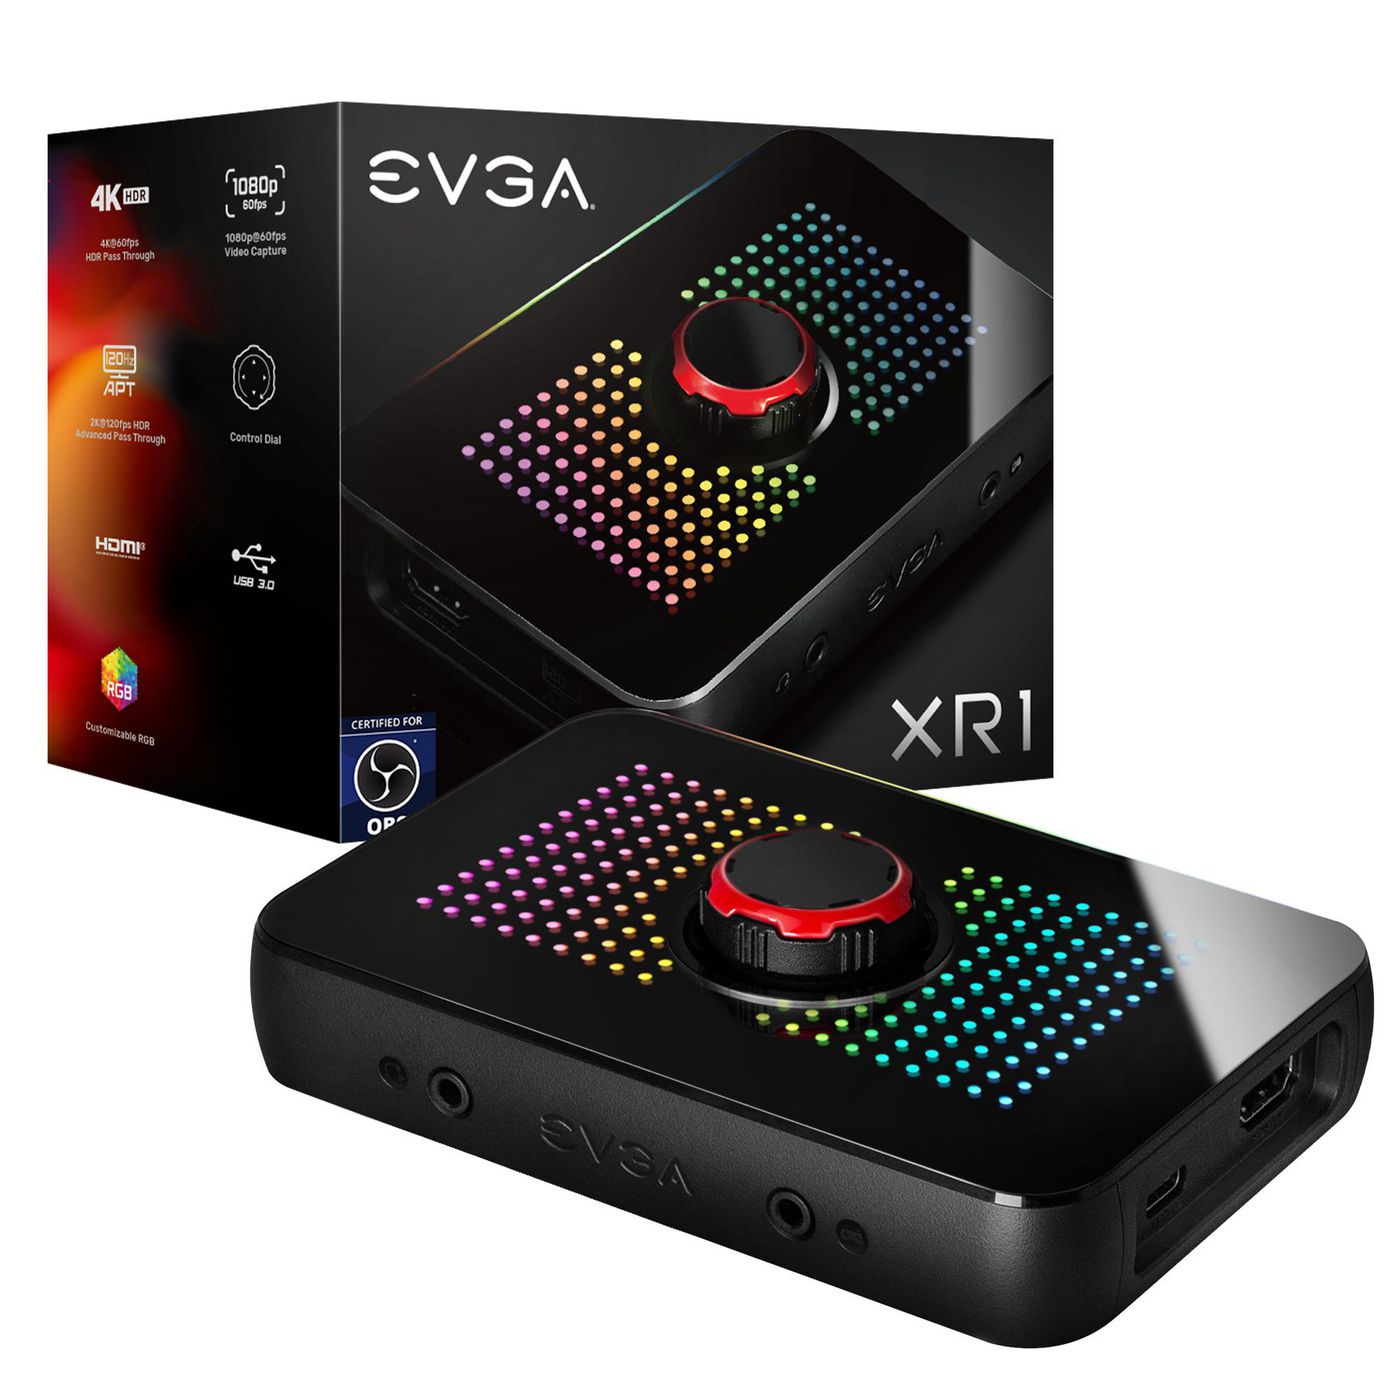 EVGA 141-U1-CB10-LR W128265257 Xr1 Video Capturing Device 